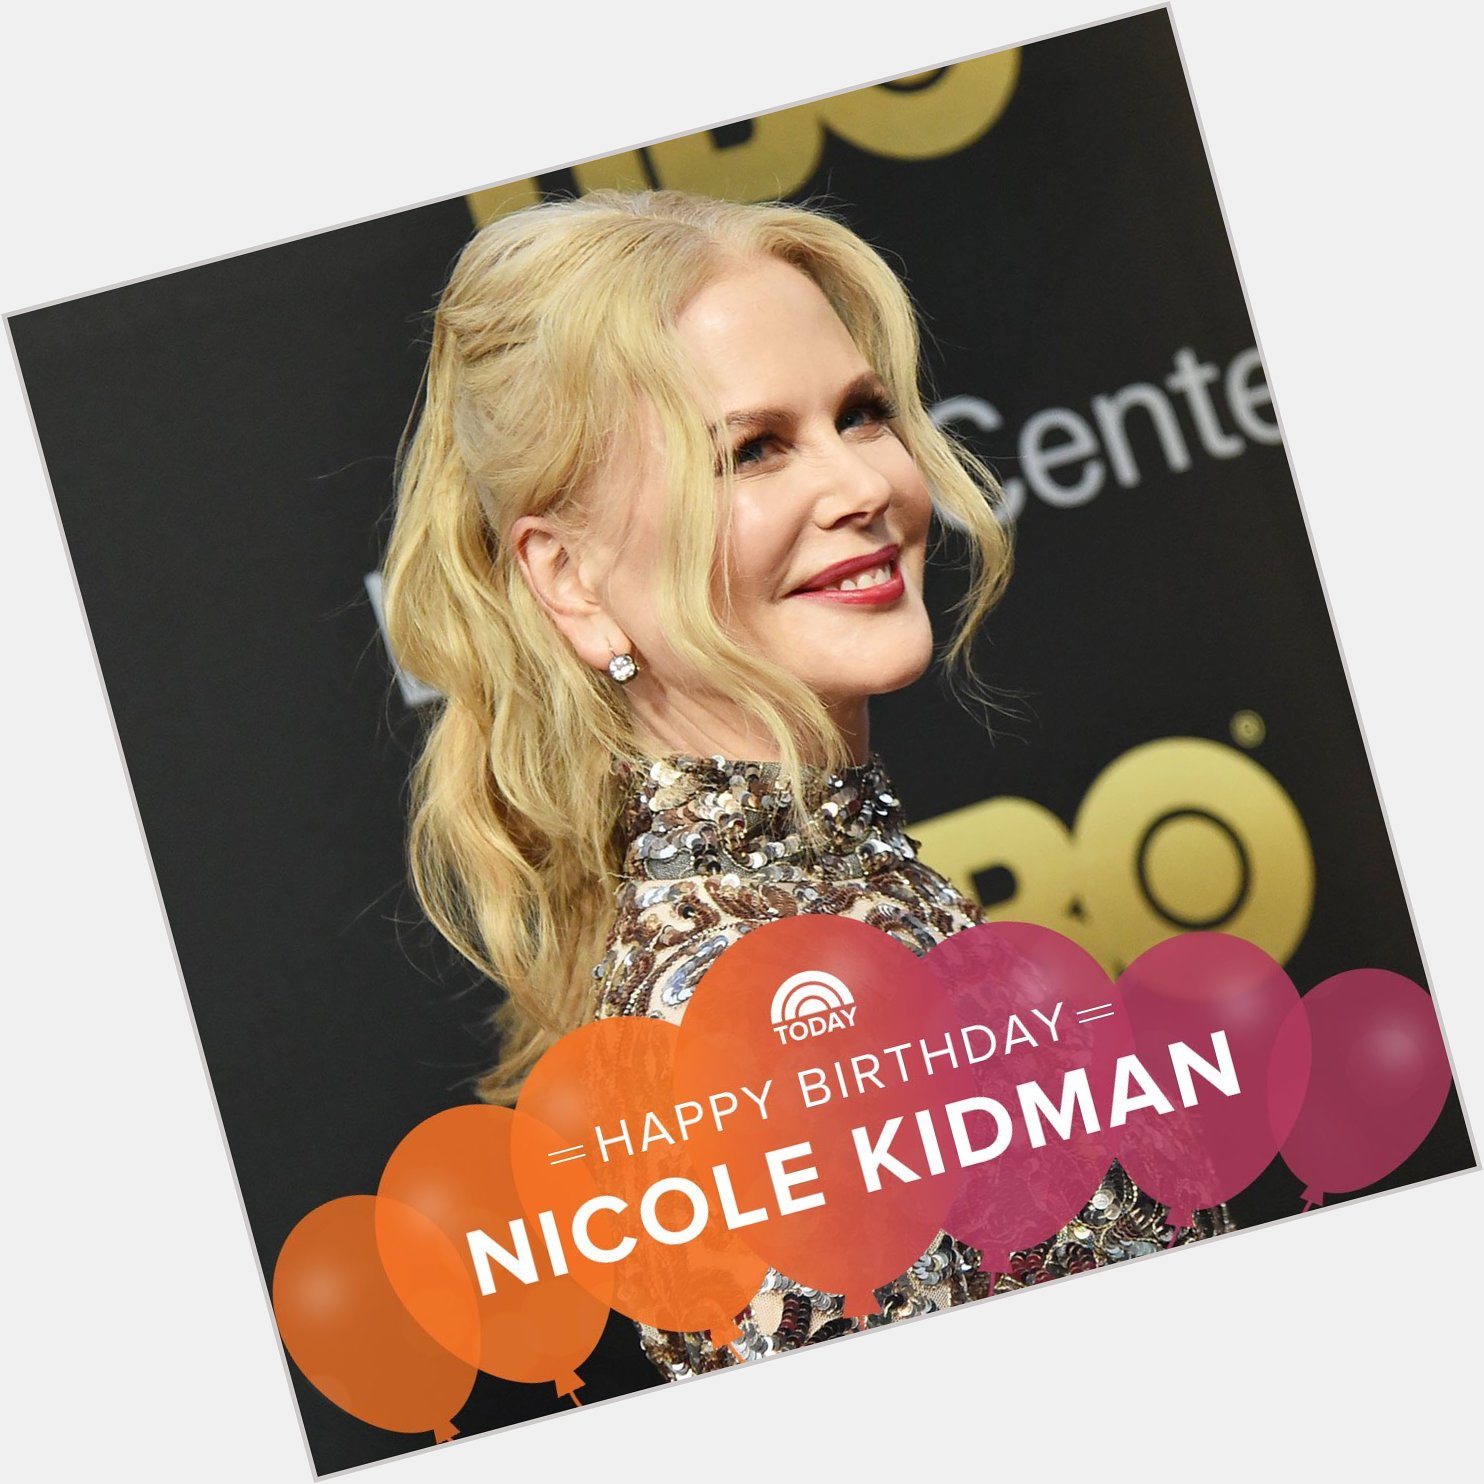 Happy birthday to the stunning Nicole Kidman! 